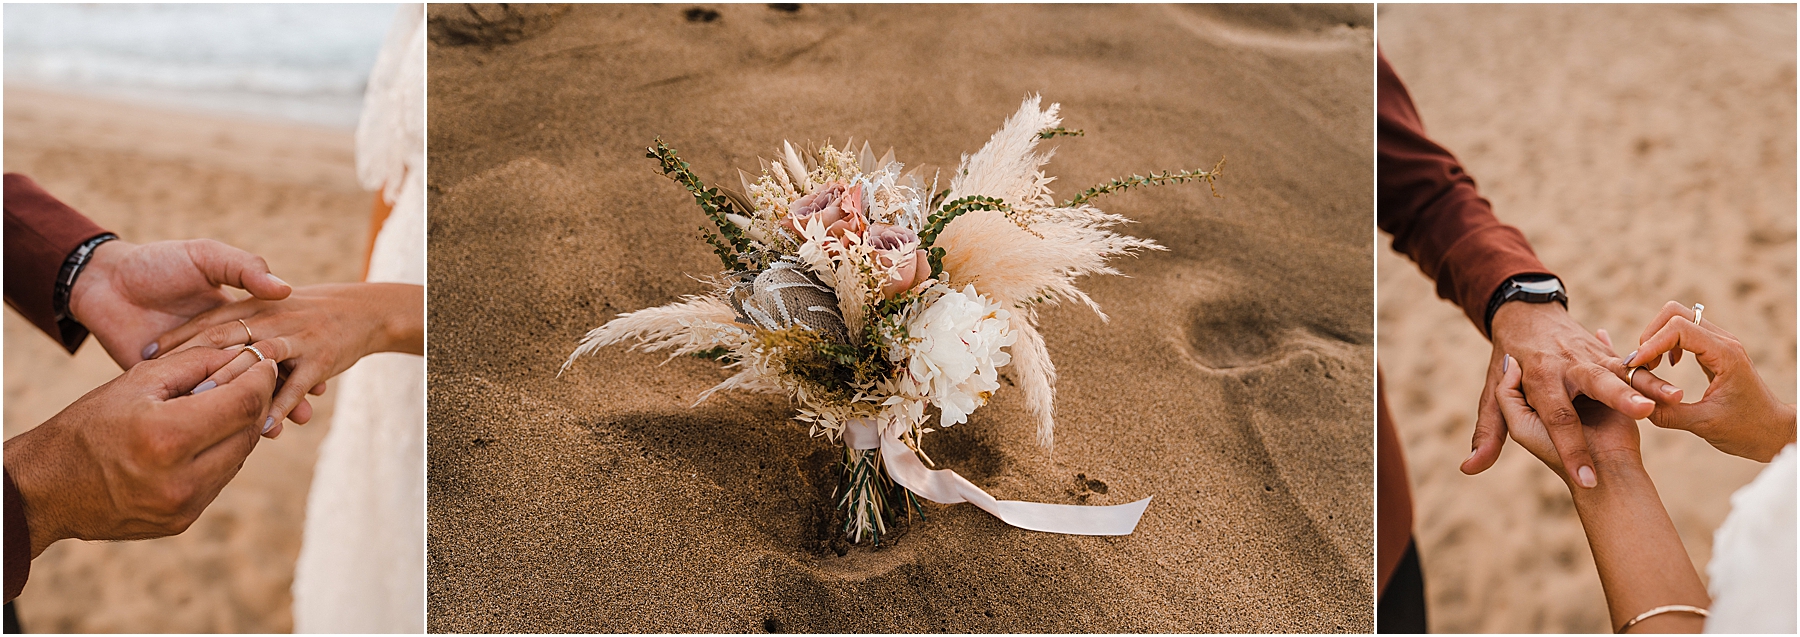 boho beach wedding bouquet